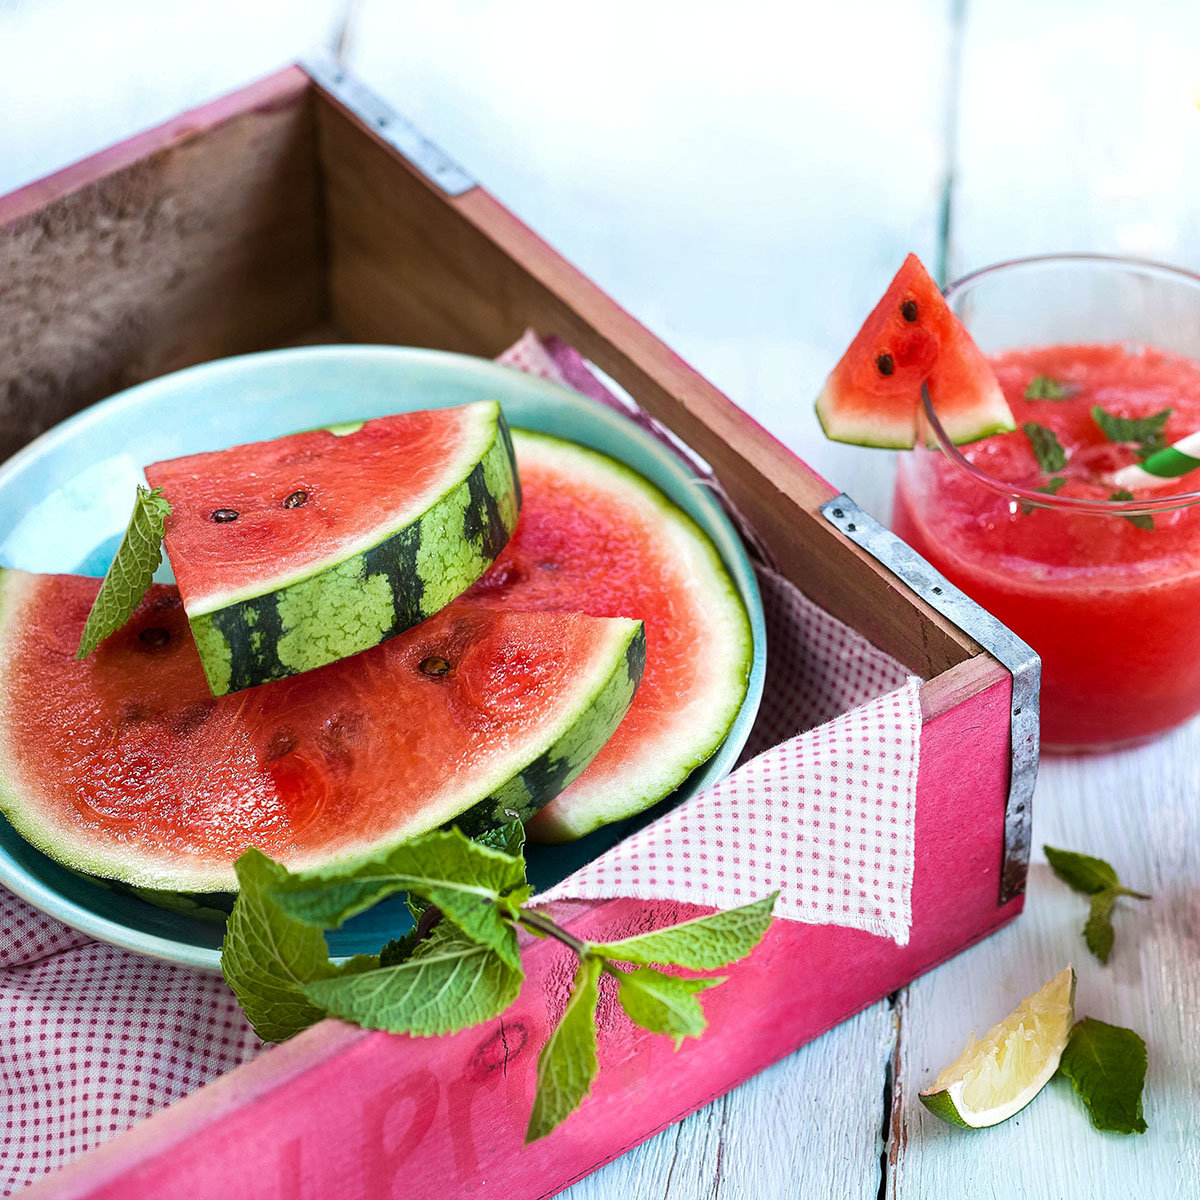 Wassermelonensamen Mini Love F1
| #2